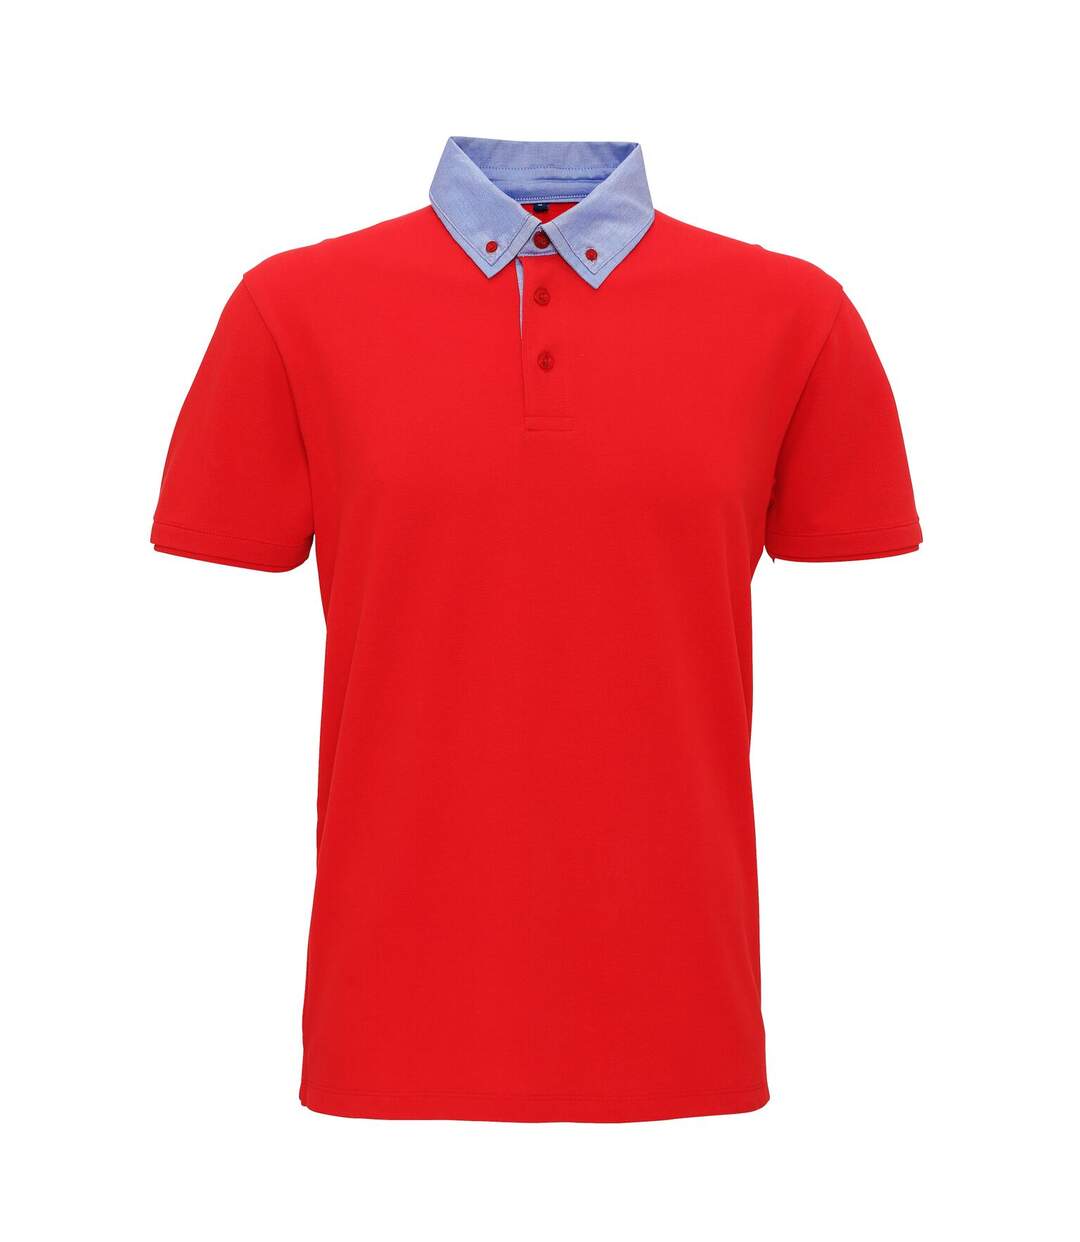 Asquith & Fox - Polo avec col a bouton - Homme (Rouge / bleu ciel) - UTRW6143